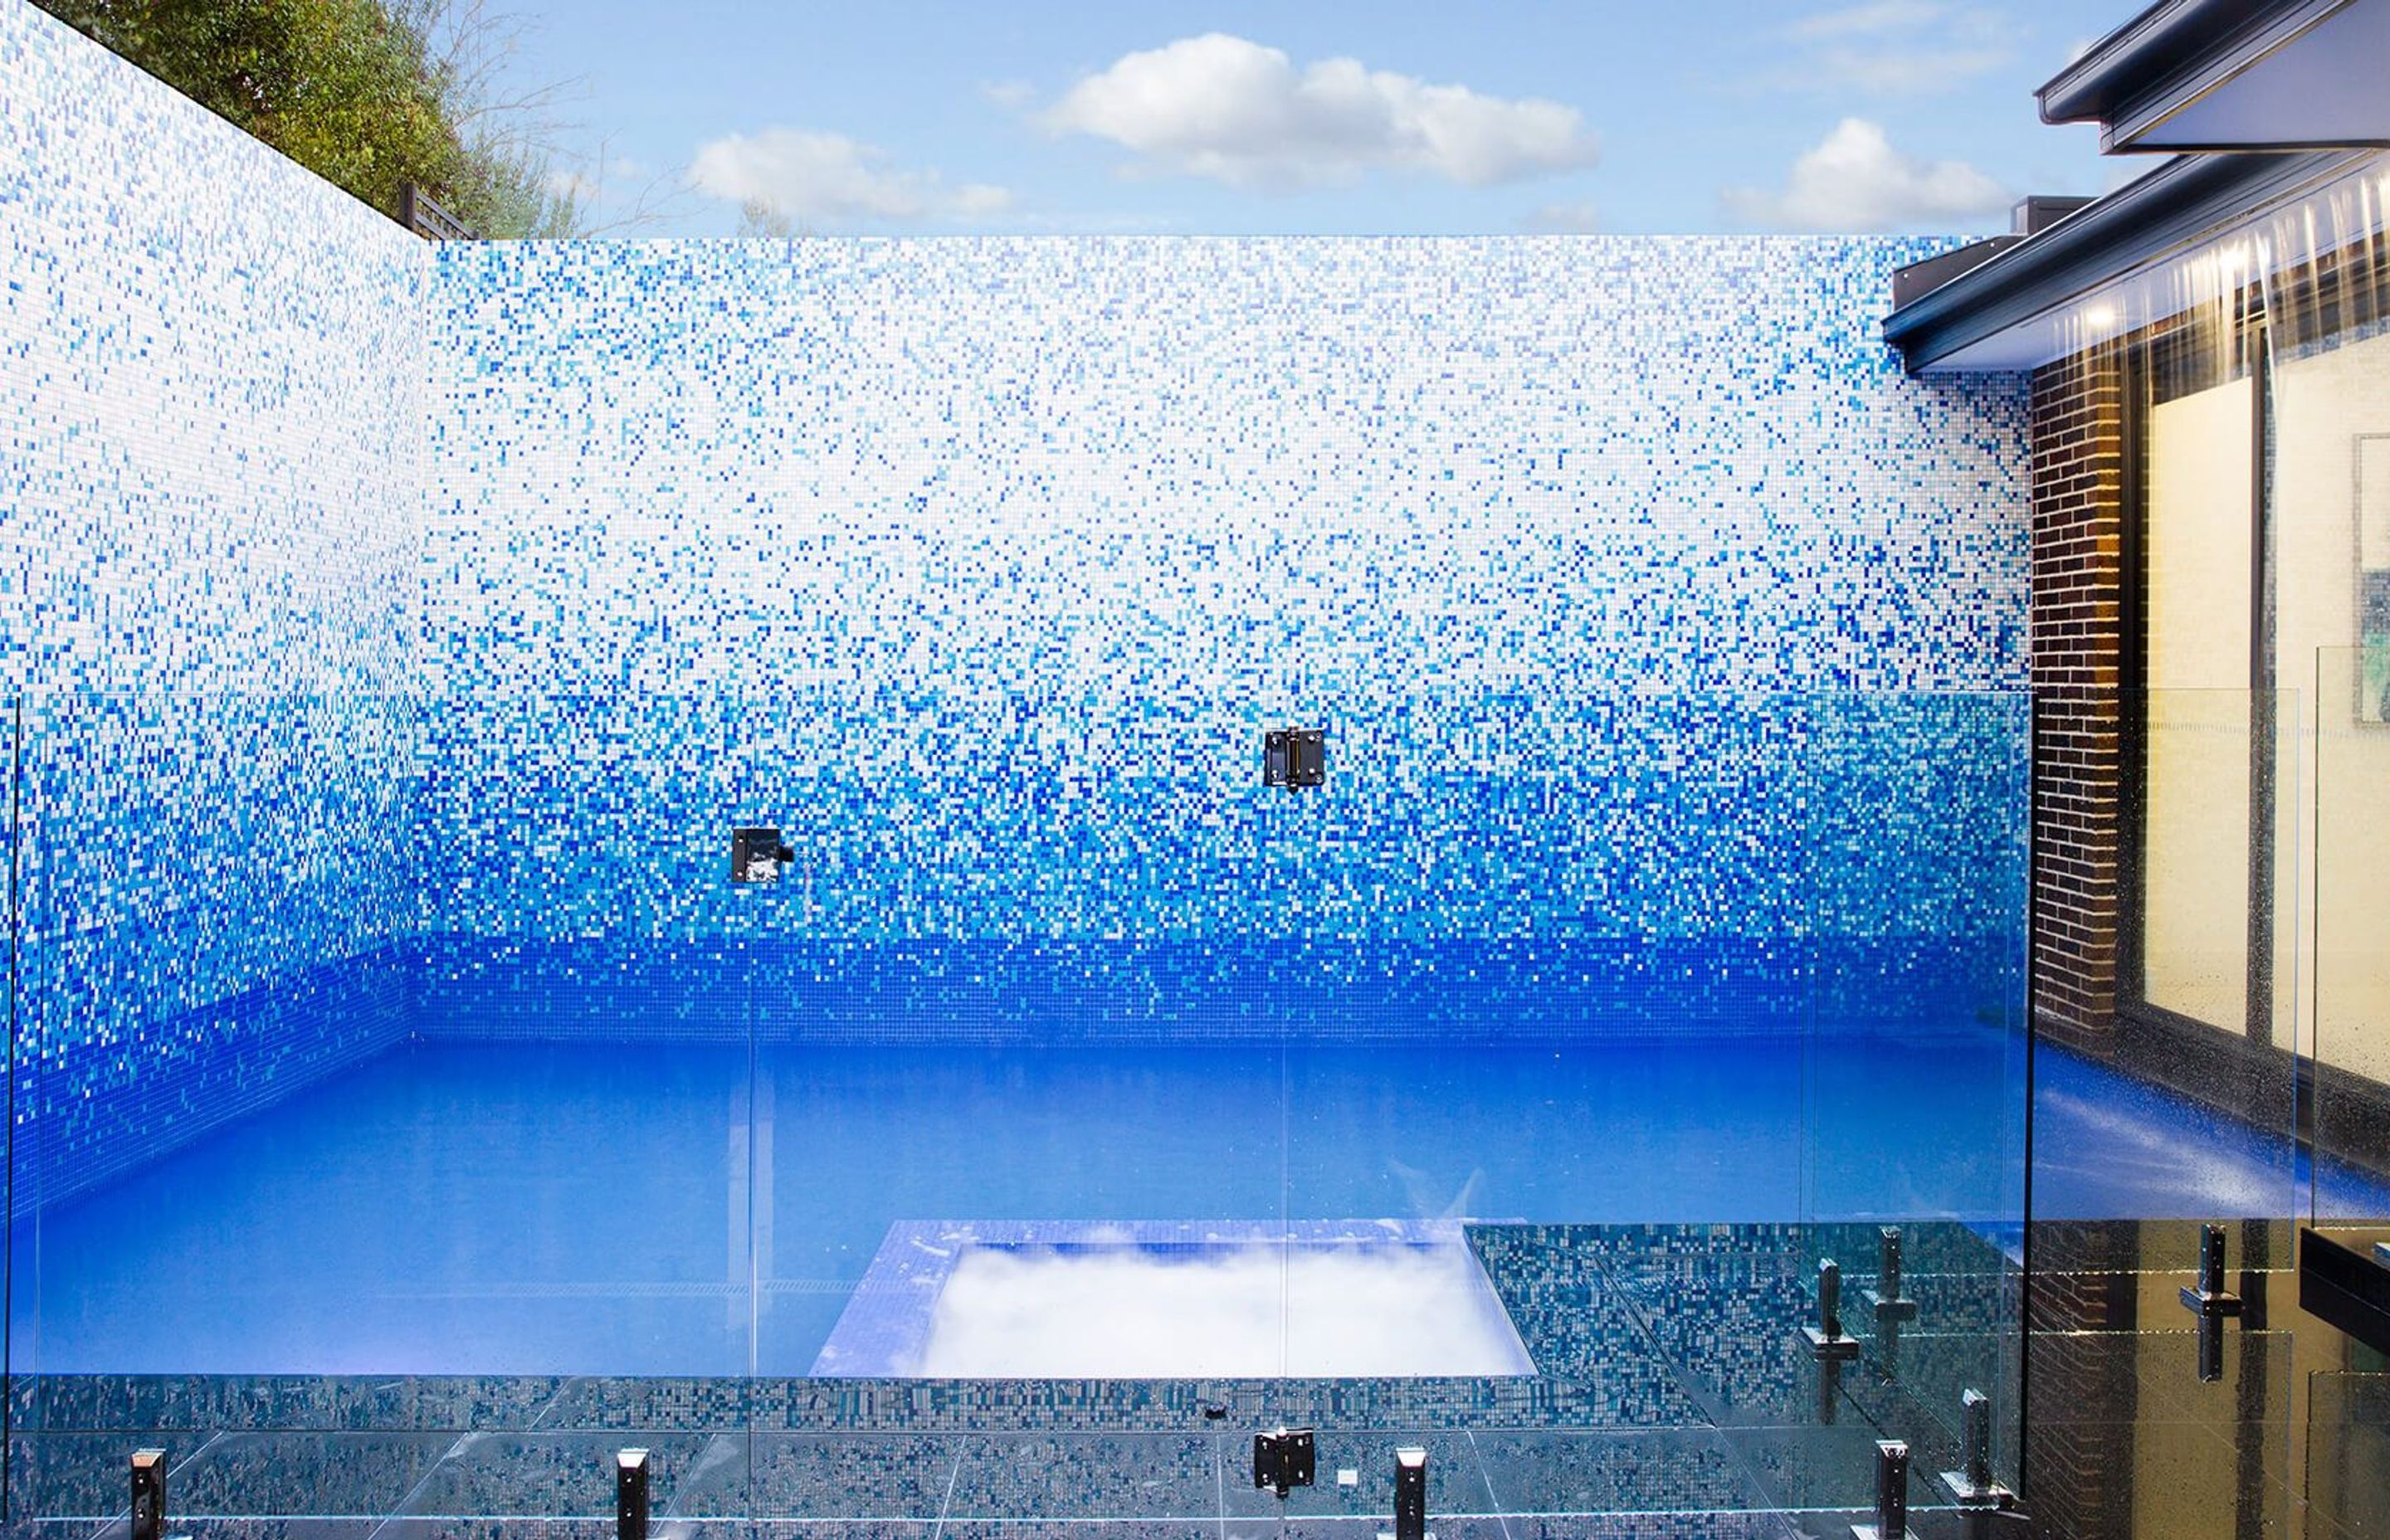 A Bisazza mosaic adorning a pool wall.